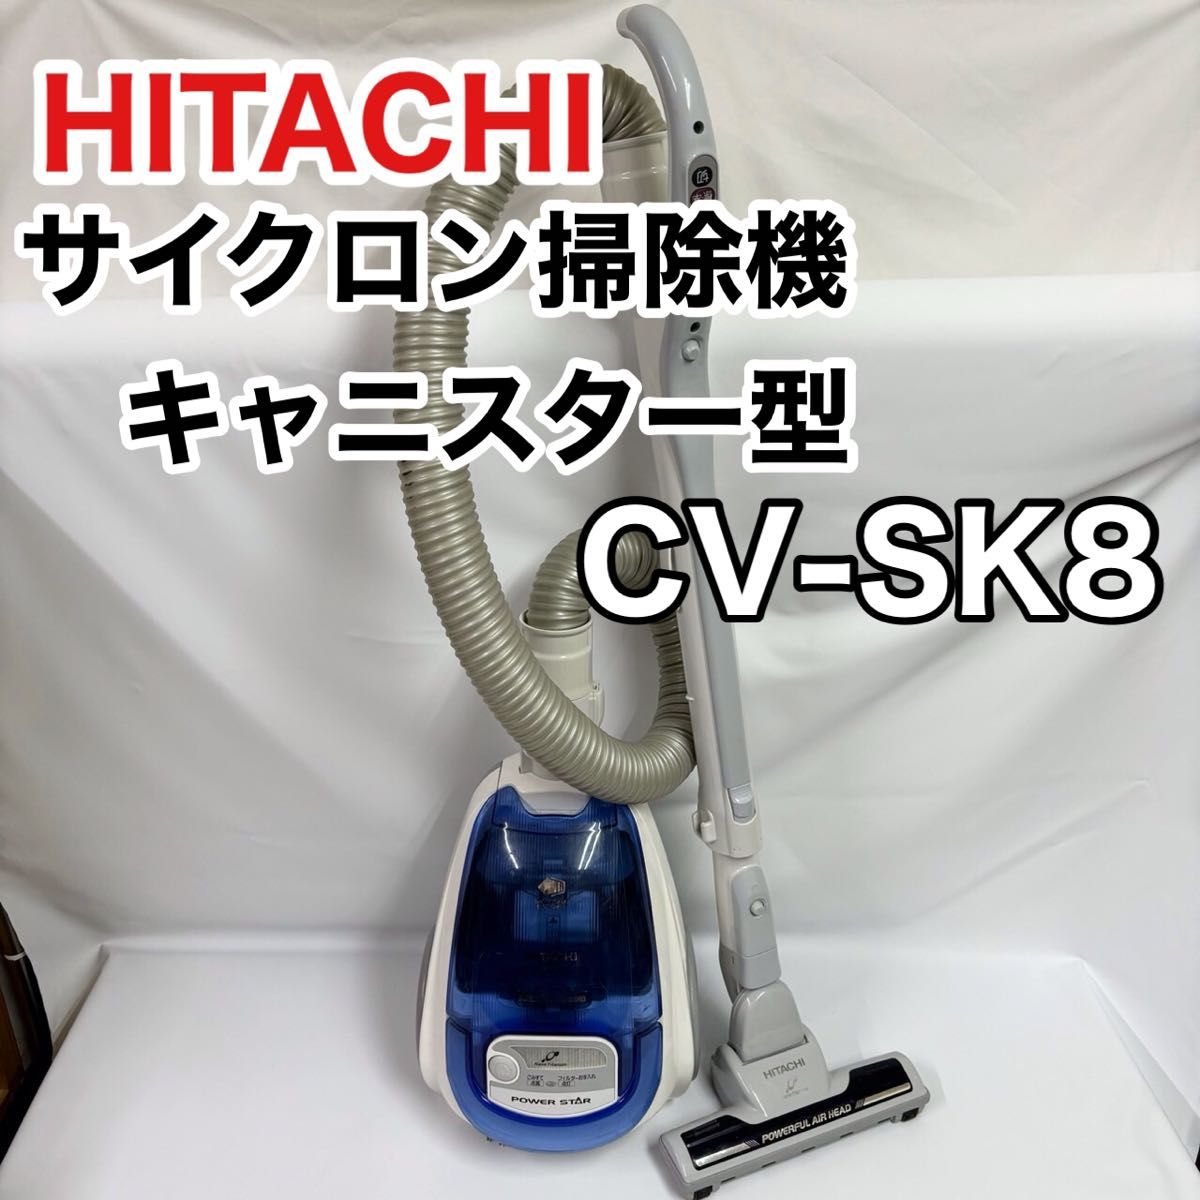 HITACHI 掃除機 CV-SK8 サイクロン掃除機 キャニスター型